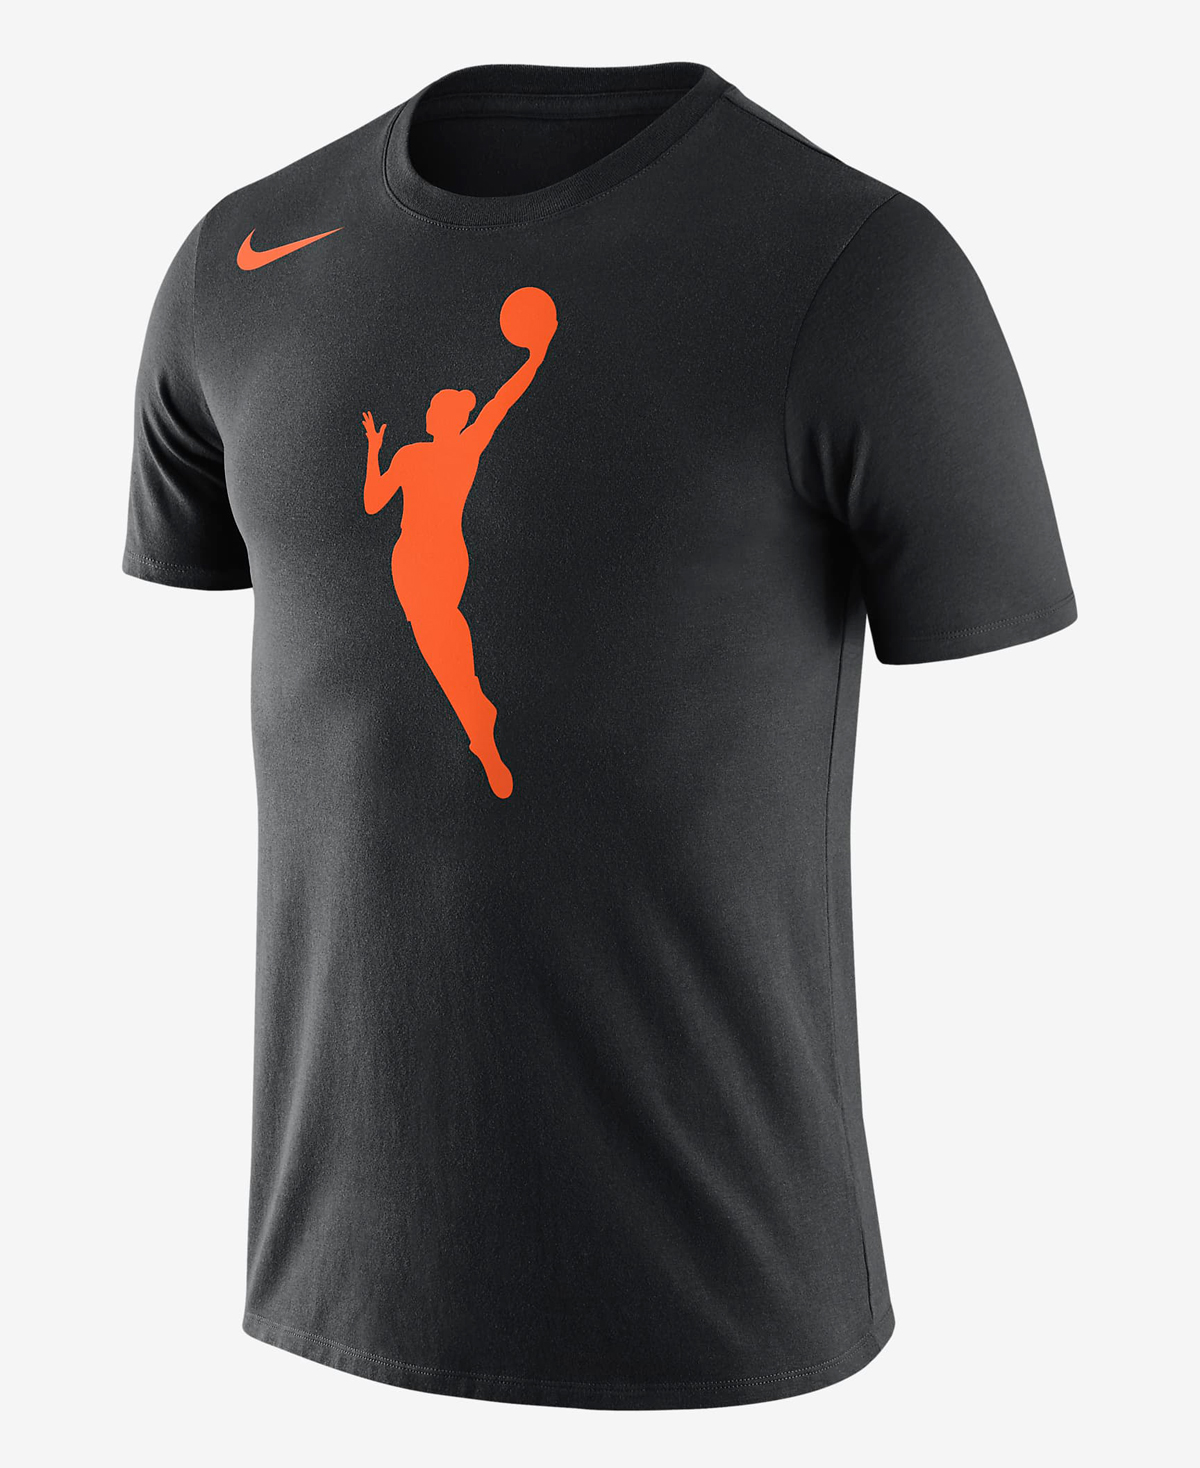 WNBA-Nike-T-Shirt-Black-Brilliant-Orange